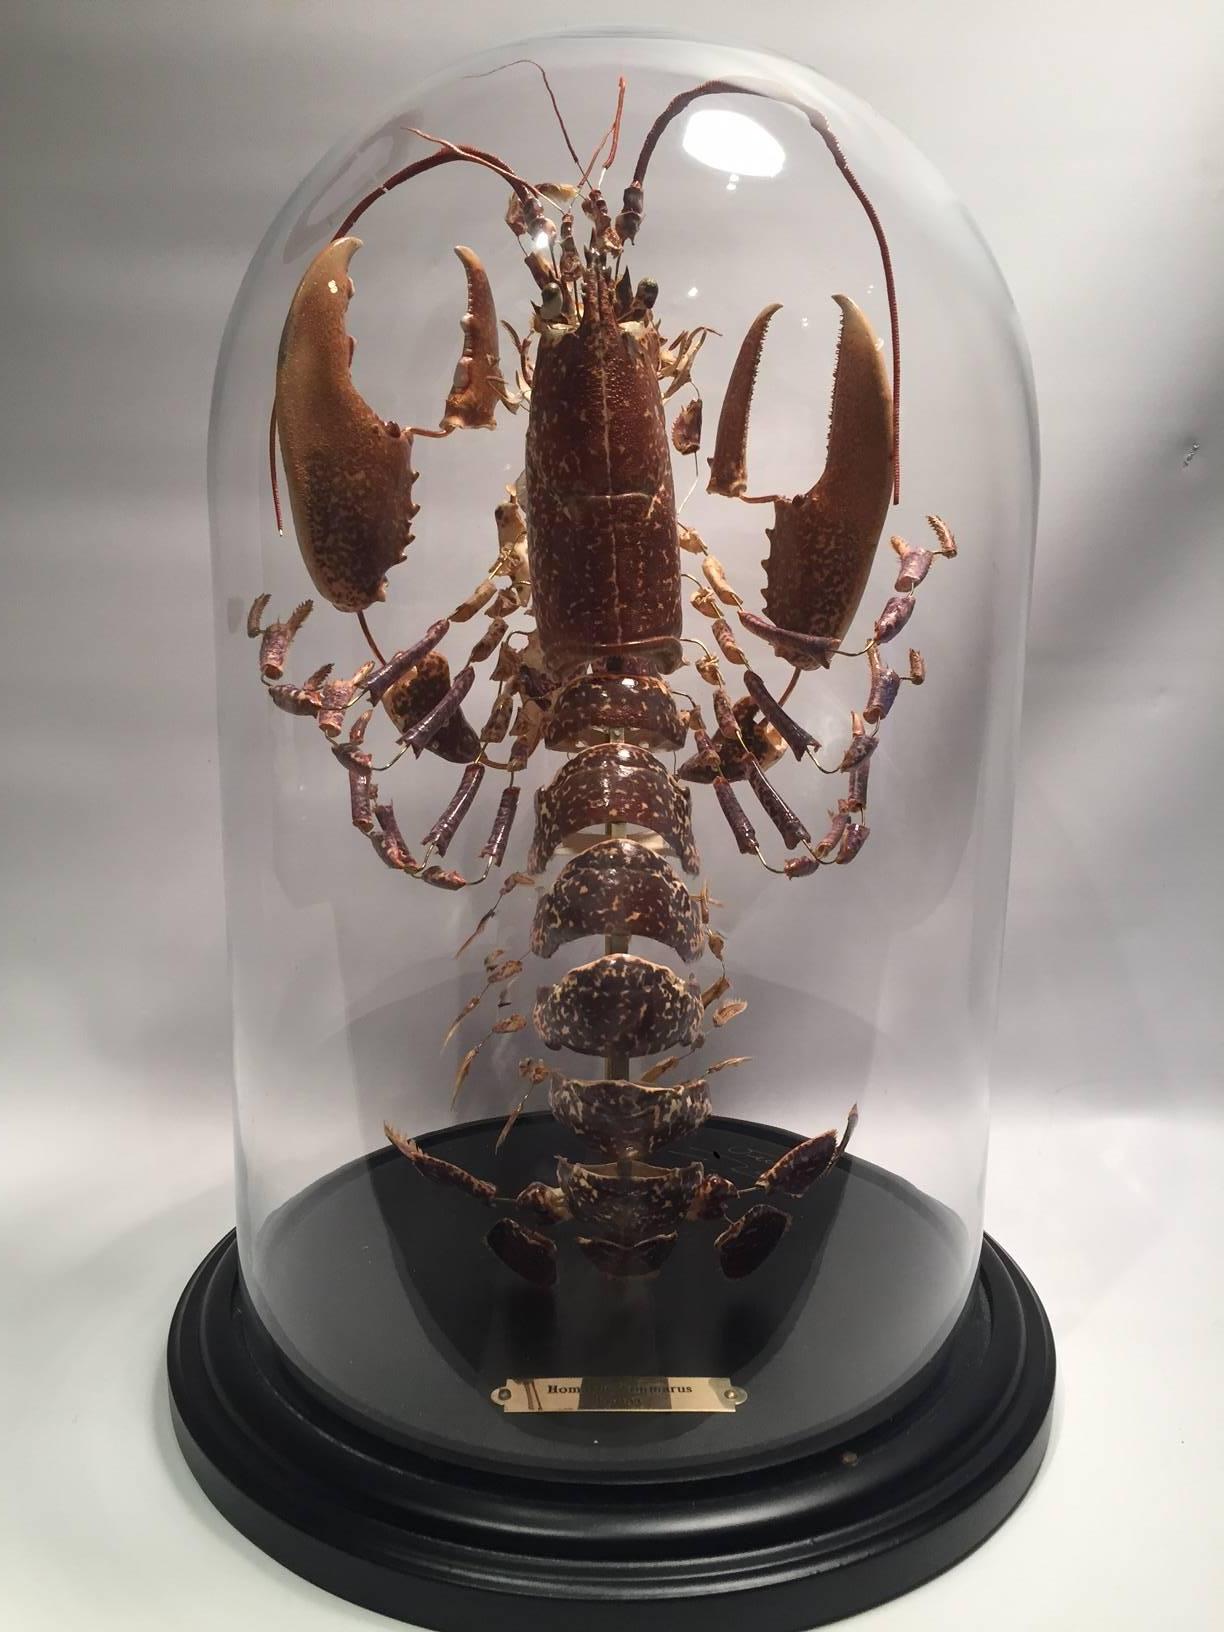 Victorian Deconstructed Clawed Lobster 'Homarus Gammarus'